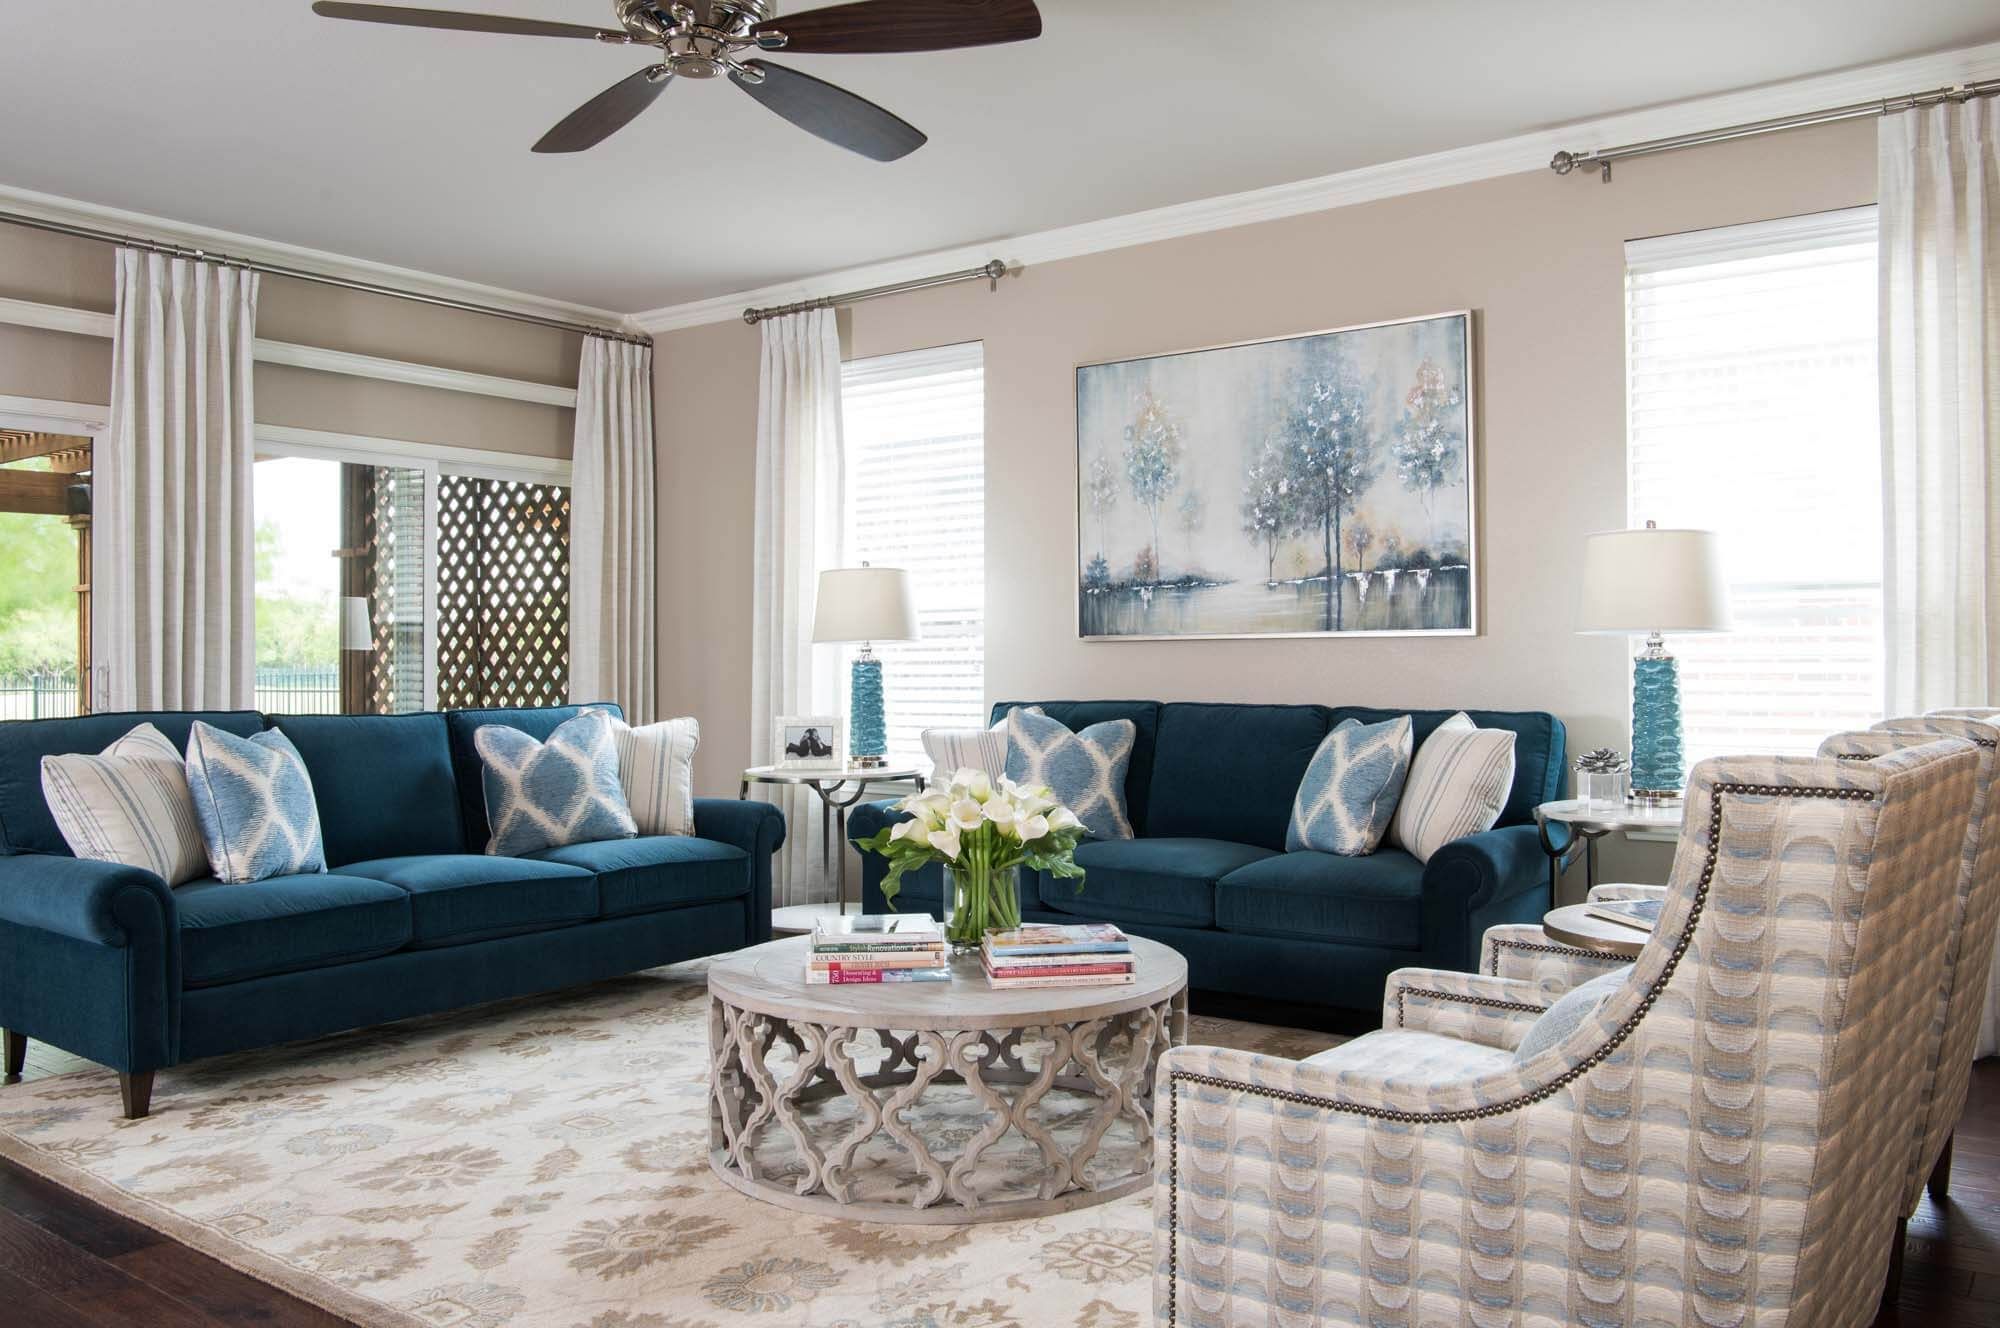 How to Brighten Your Living Room Design